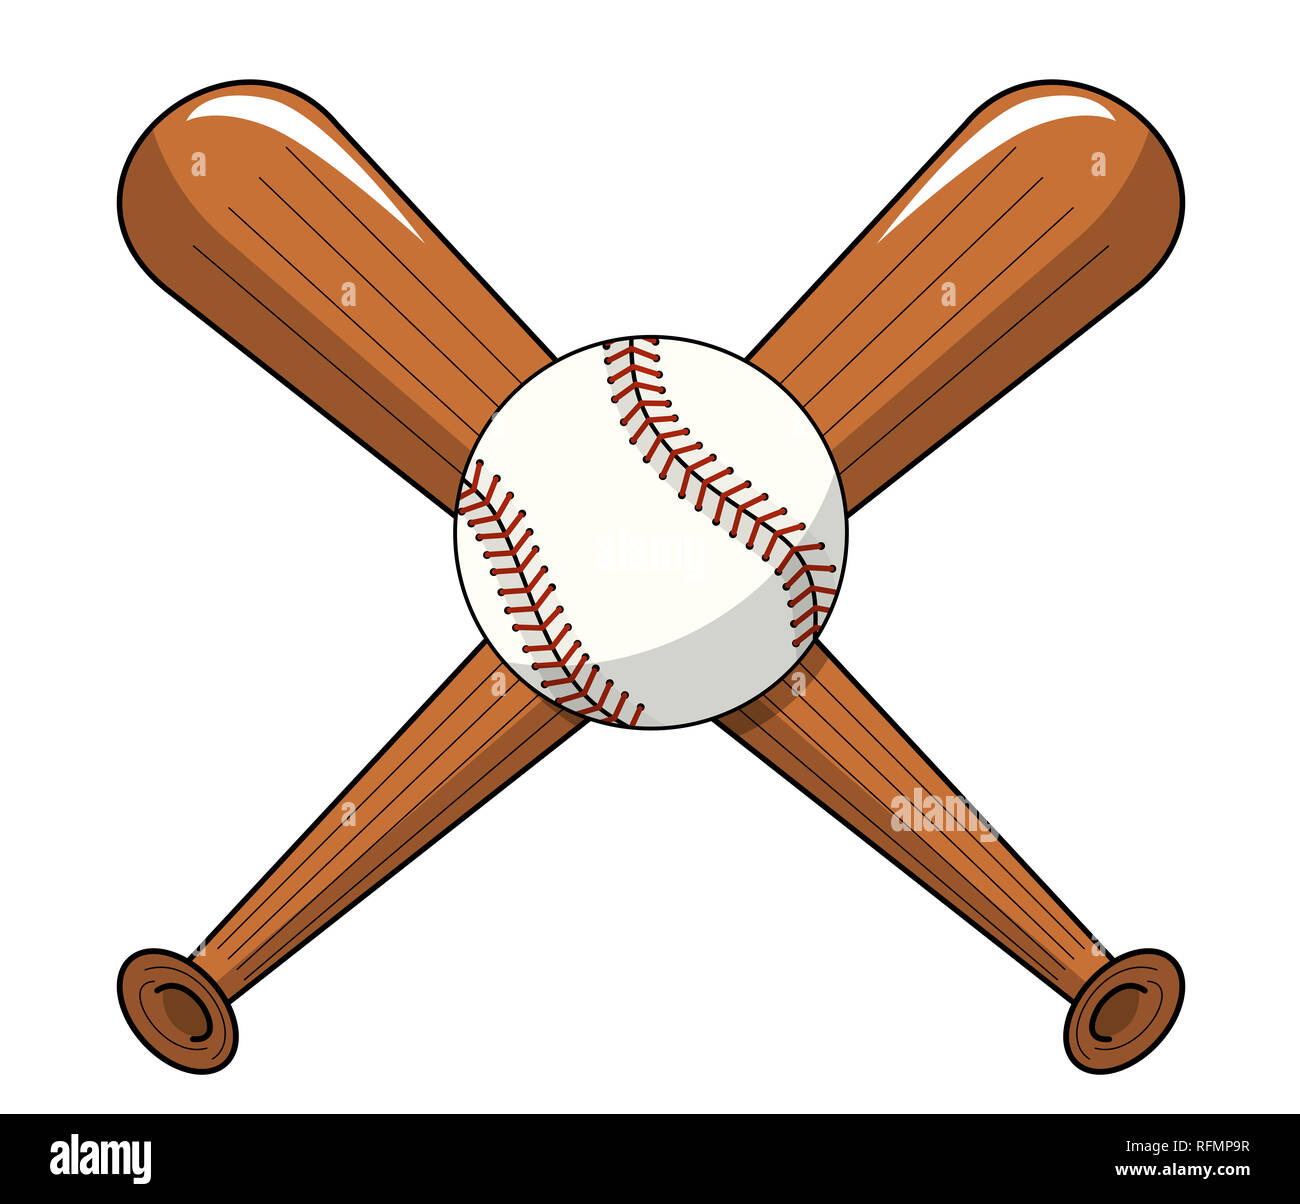 baseball ball crossed wooden bats logo cartoon vector isolated on white  Stock Photo - Alamy